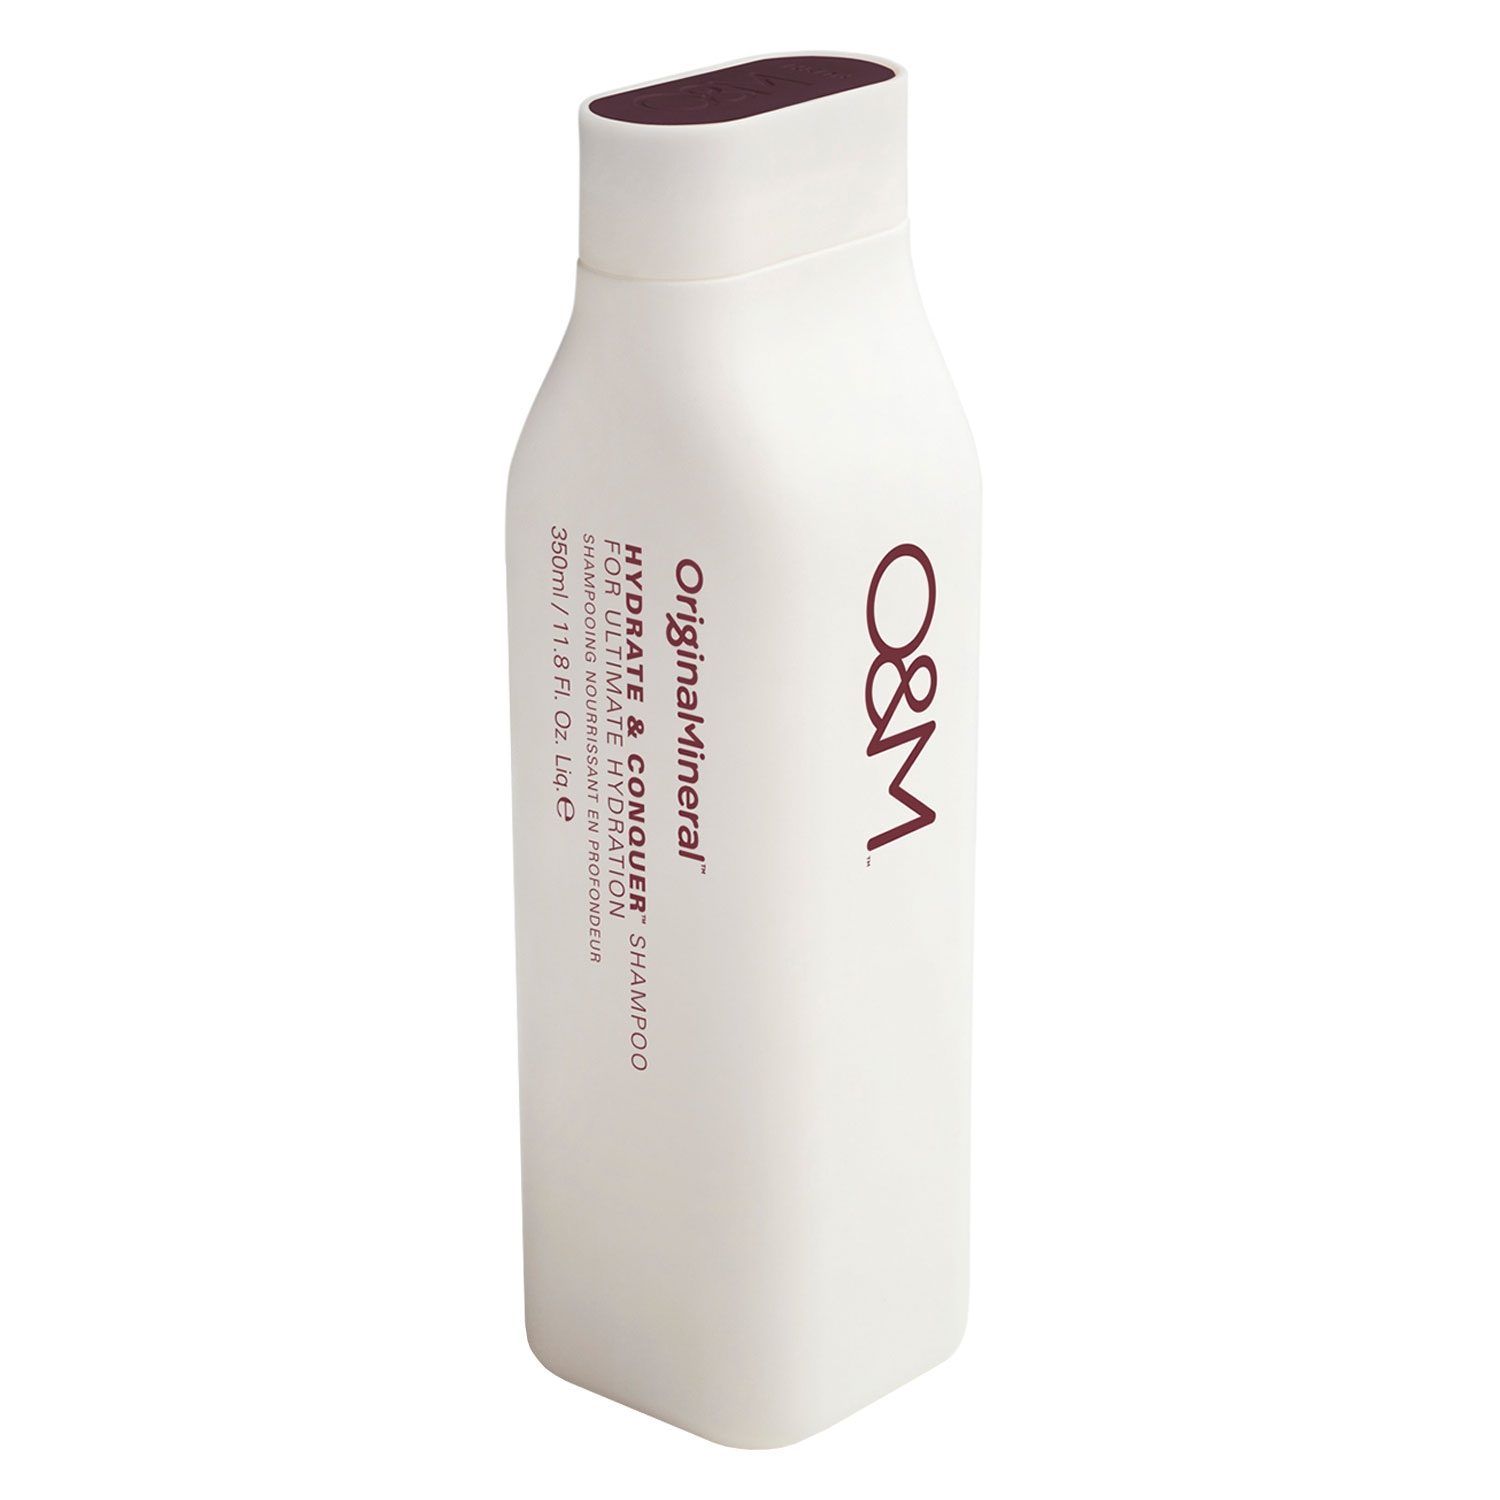 Produktbild von O&M Haircare - Hydrate & Conquer Shampoo